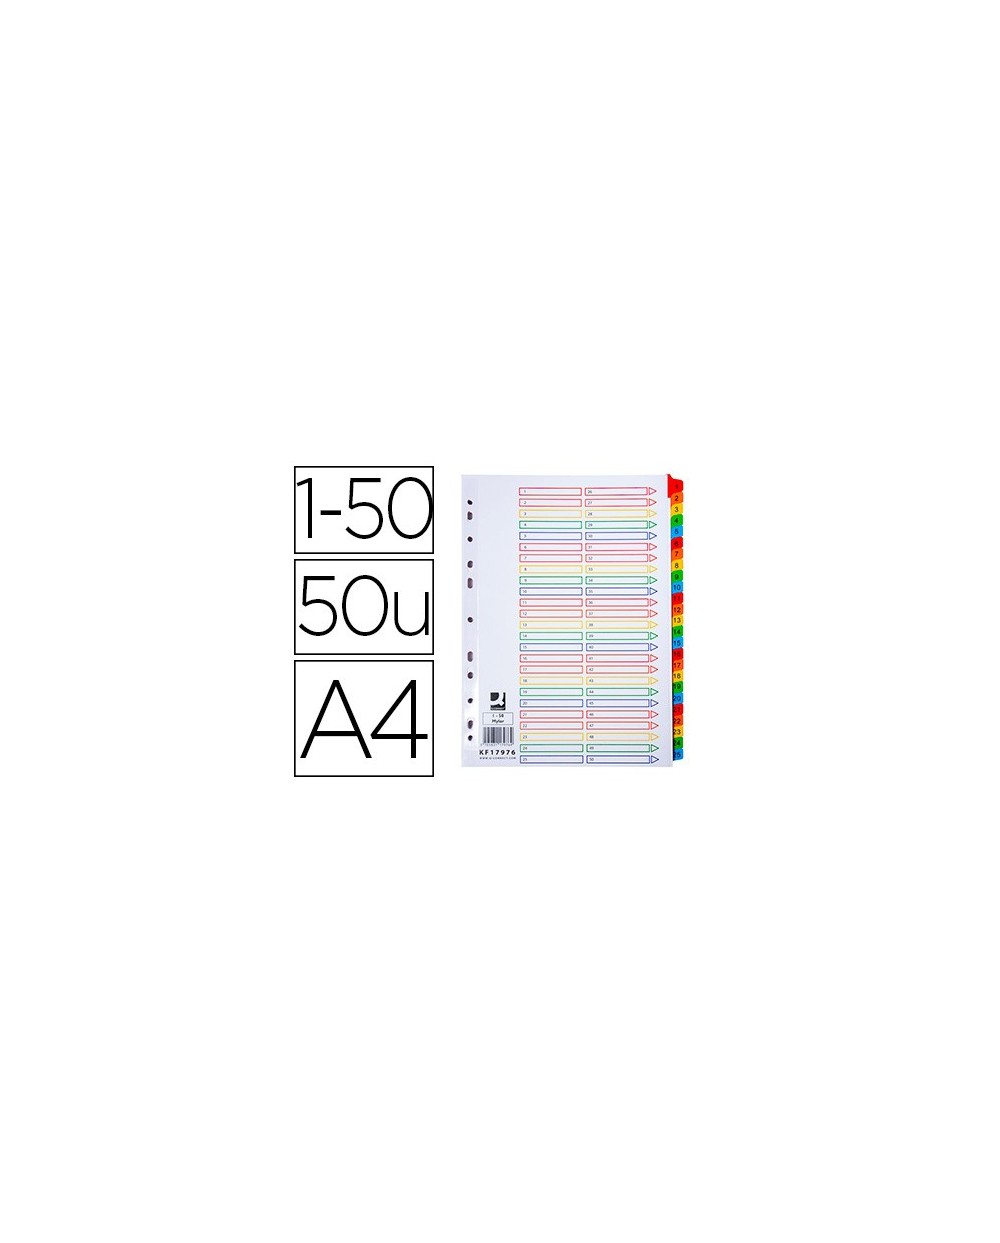 Separador numerico q connect plastico 1 50 juego de 50 separadores din a4 multitaladro